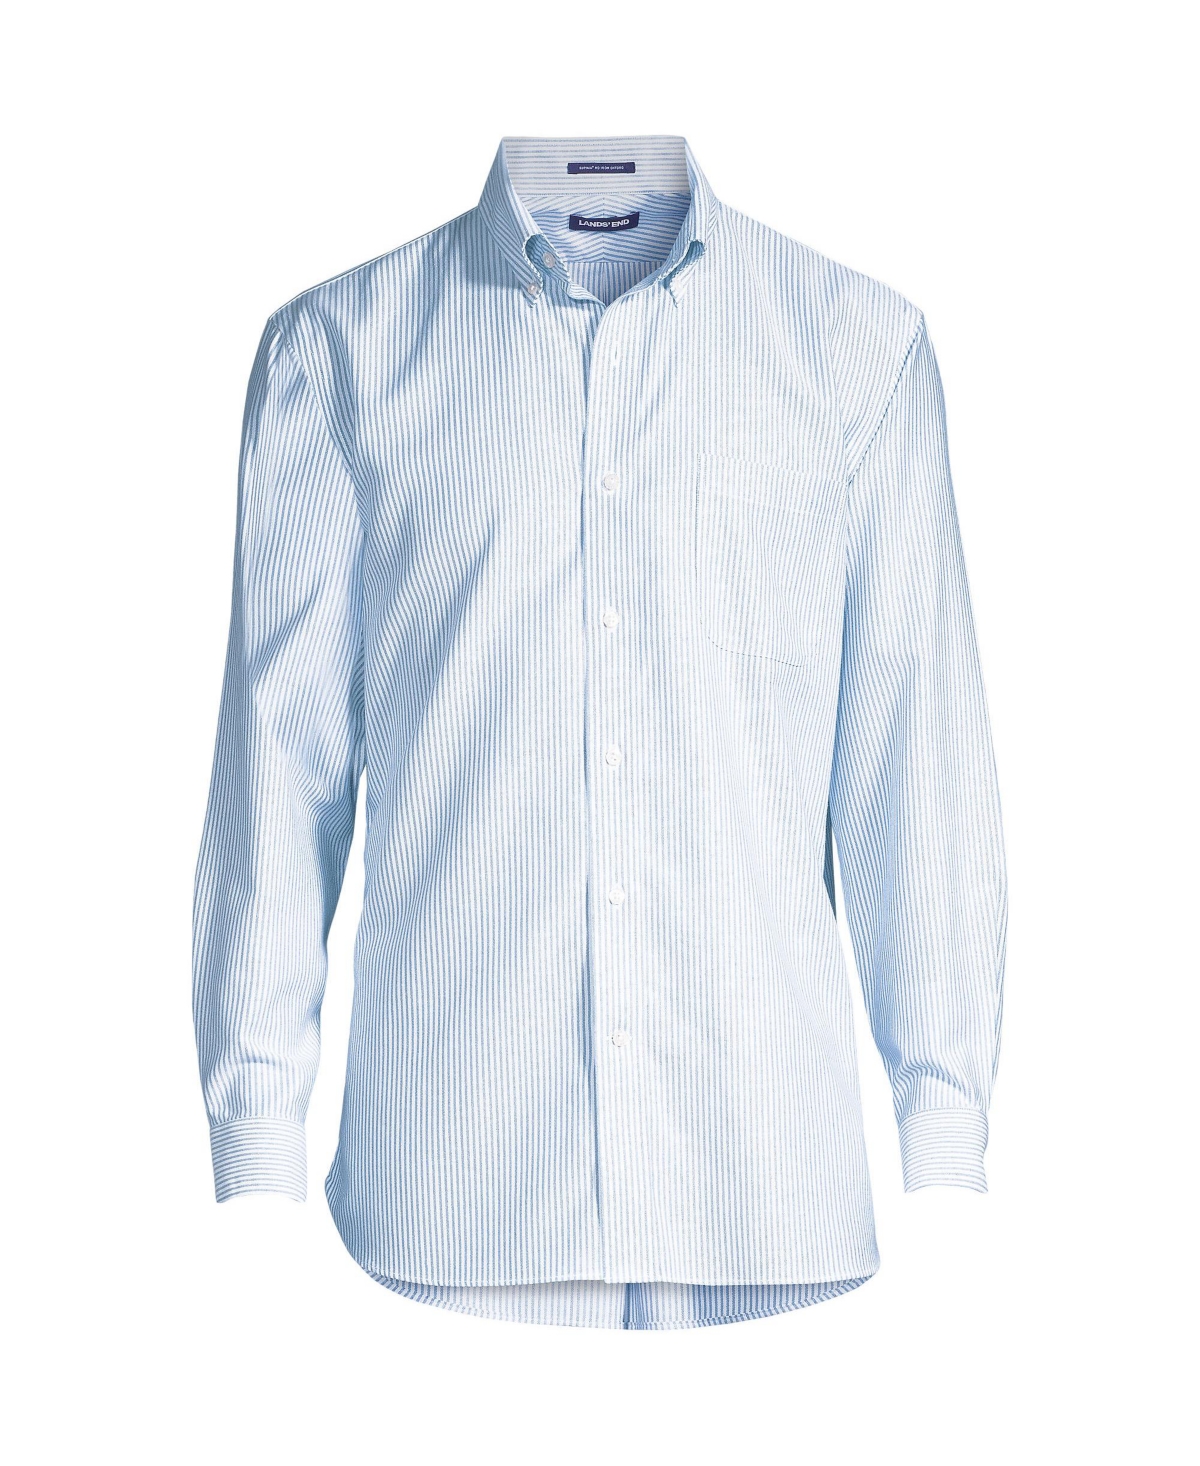 Big & Tall Traditional Fit Pattern No Iron Supima Oxford Dress Shirt - Deep sea navy stripe